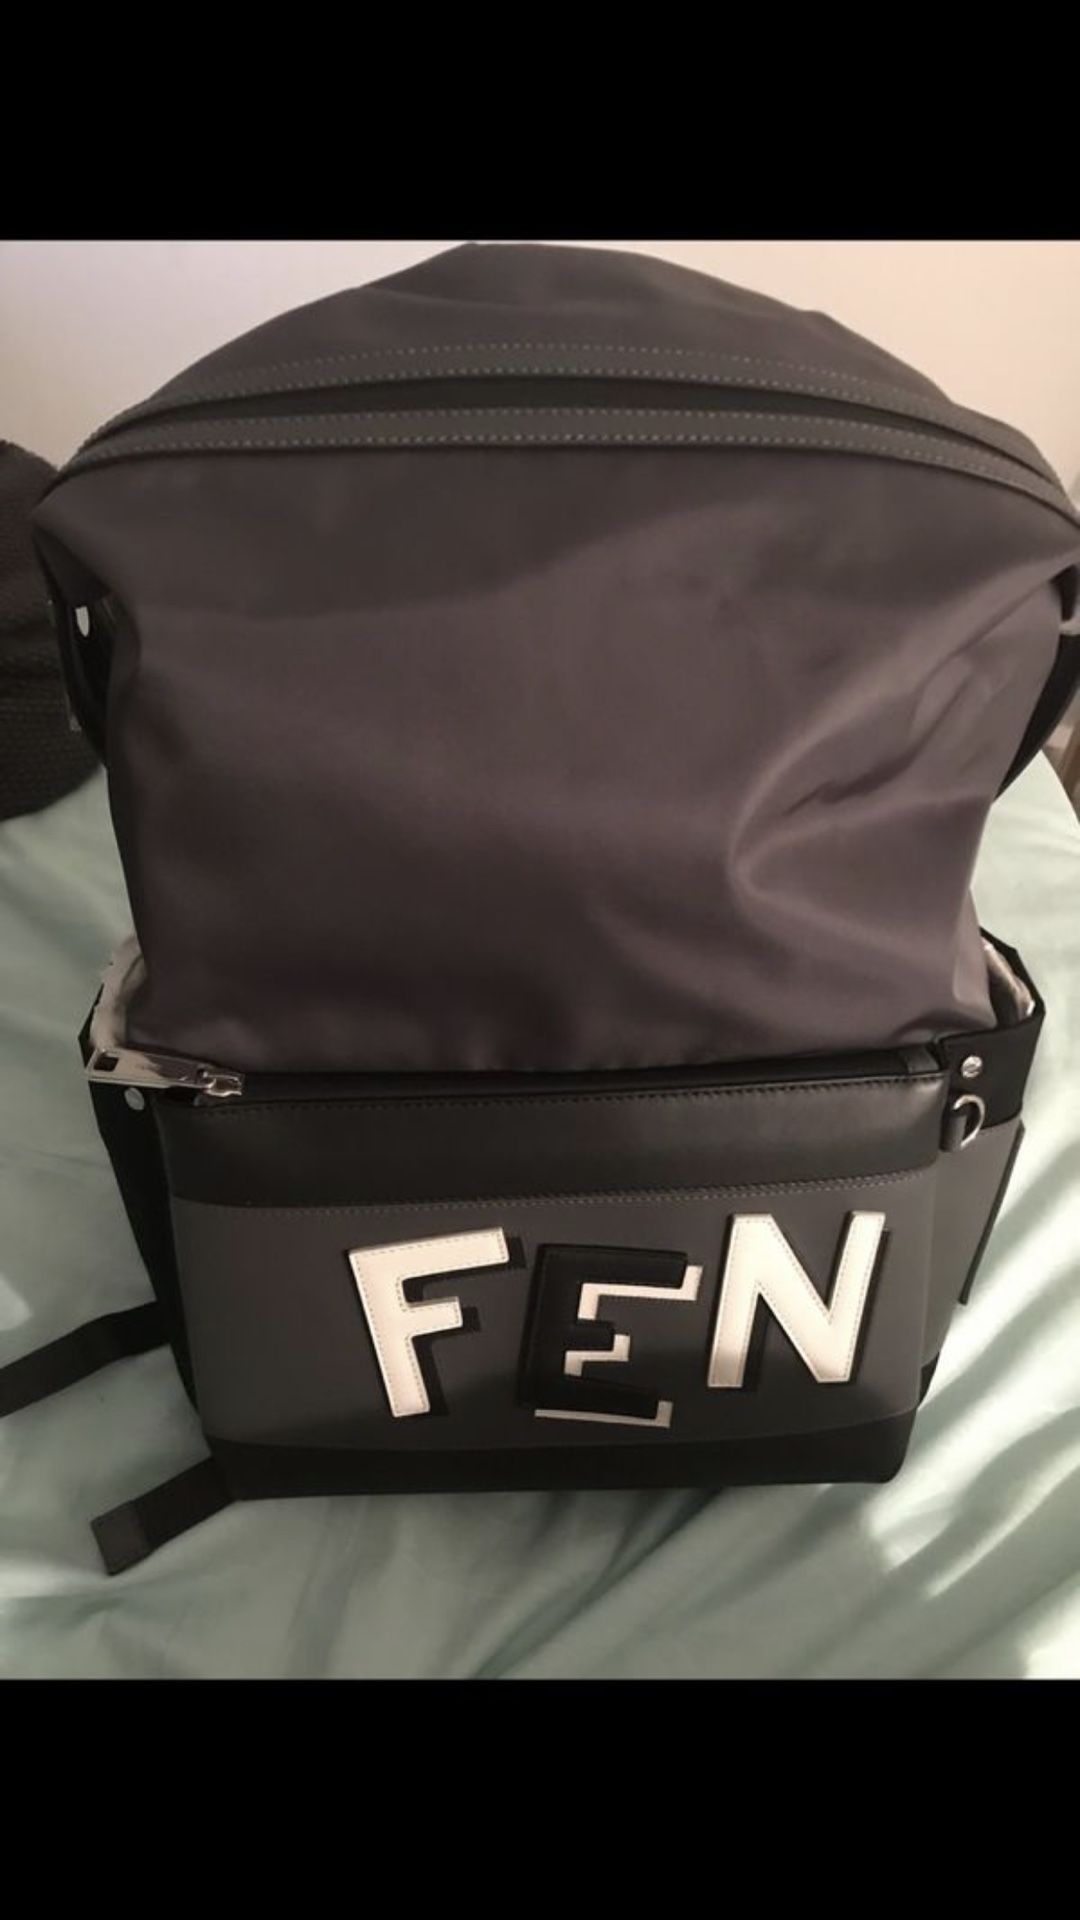 New Fendi bookbag/backpack!